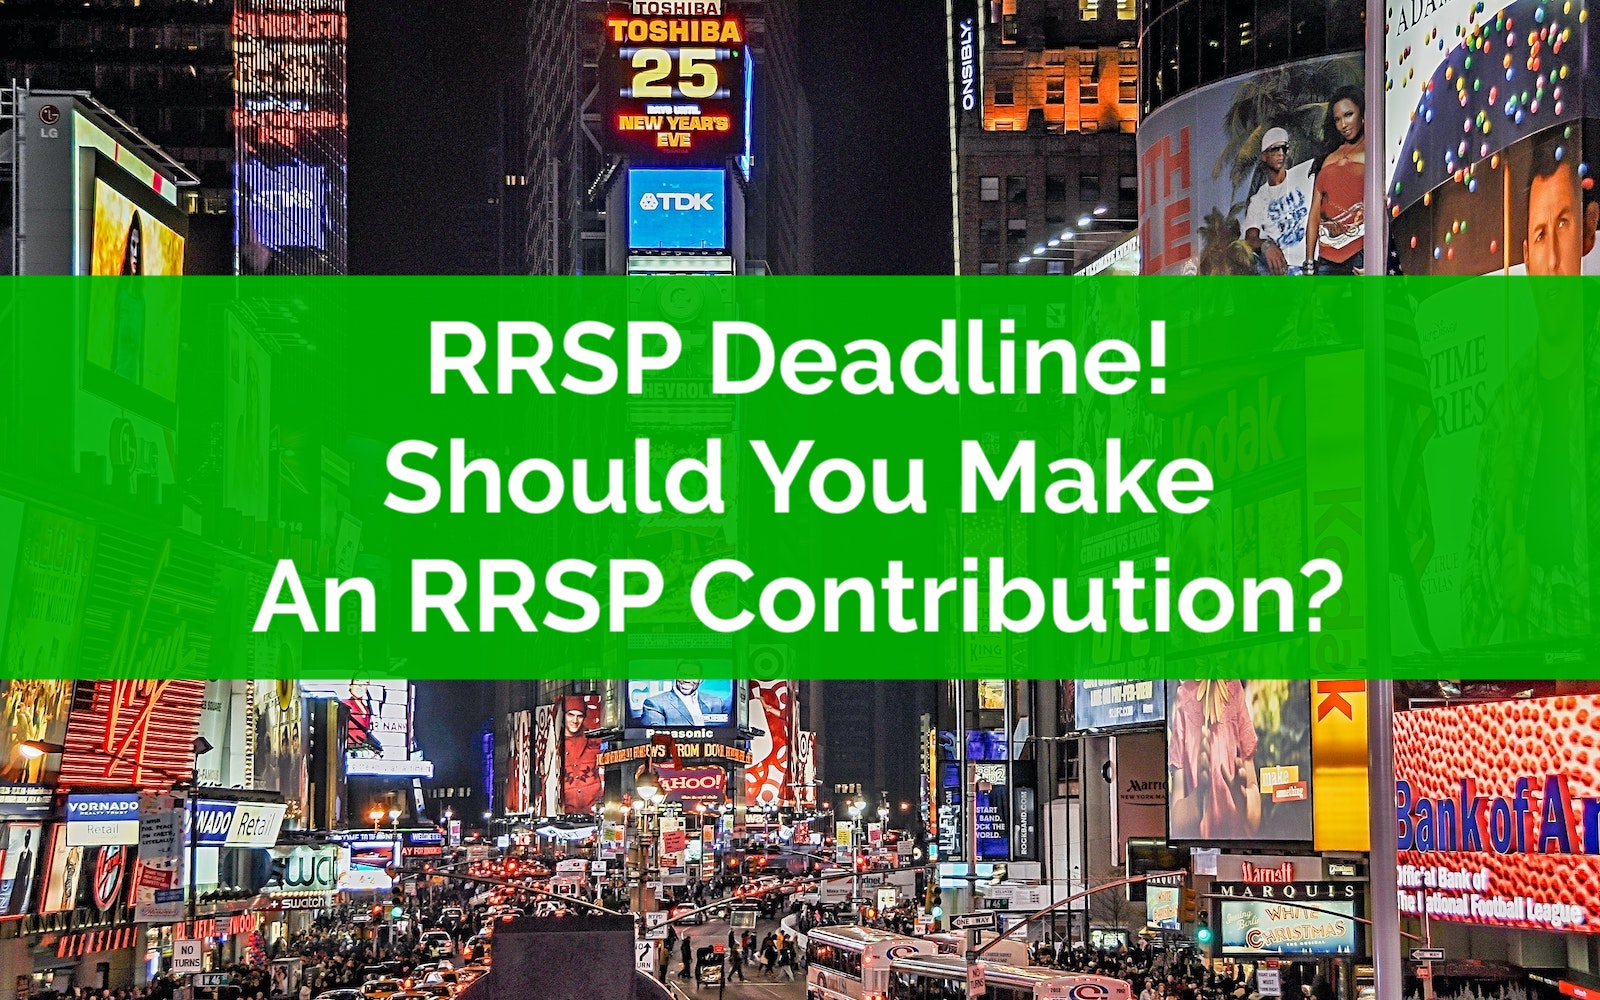 RRSP Deadline Should You Make An RRSP Contribution 1600x1000 w